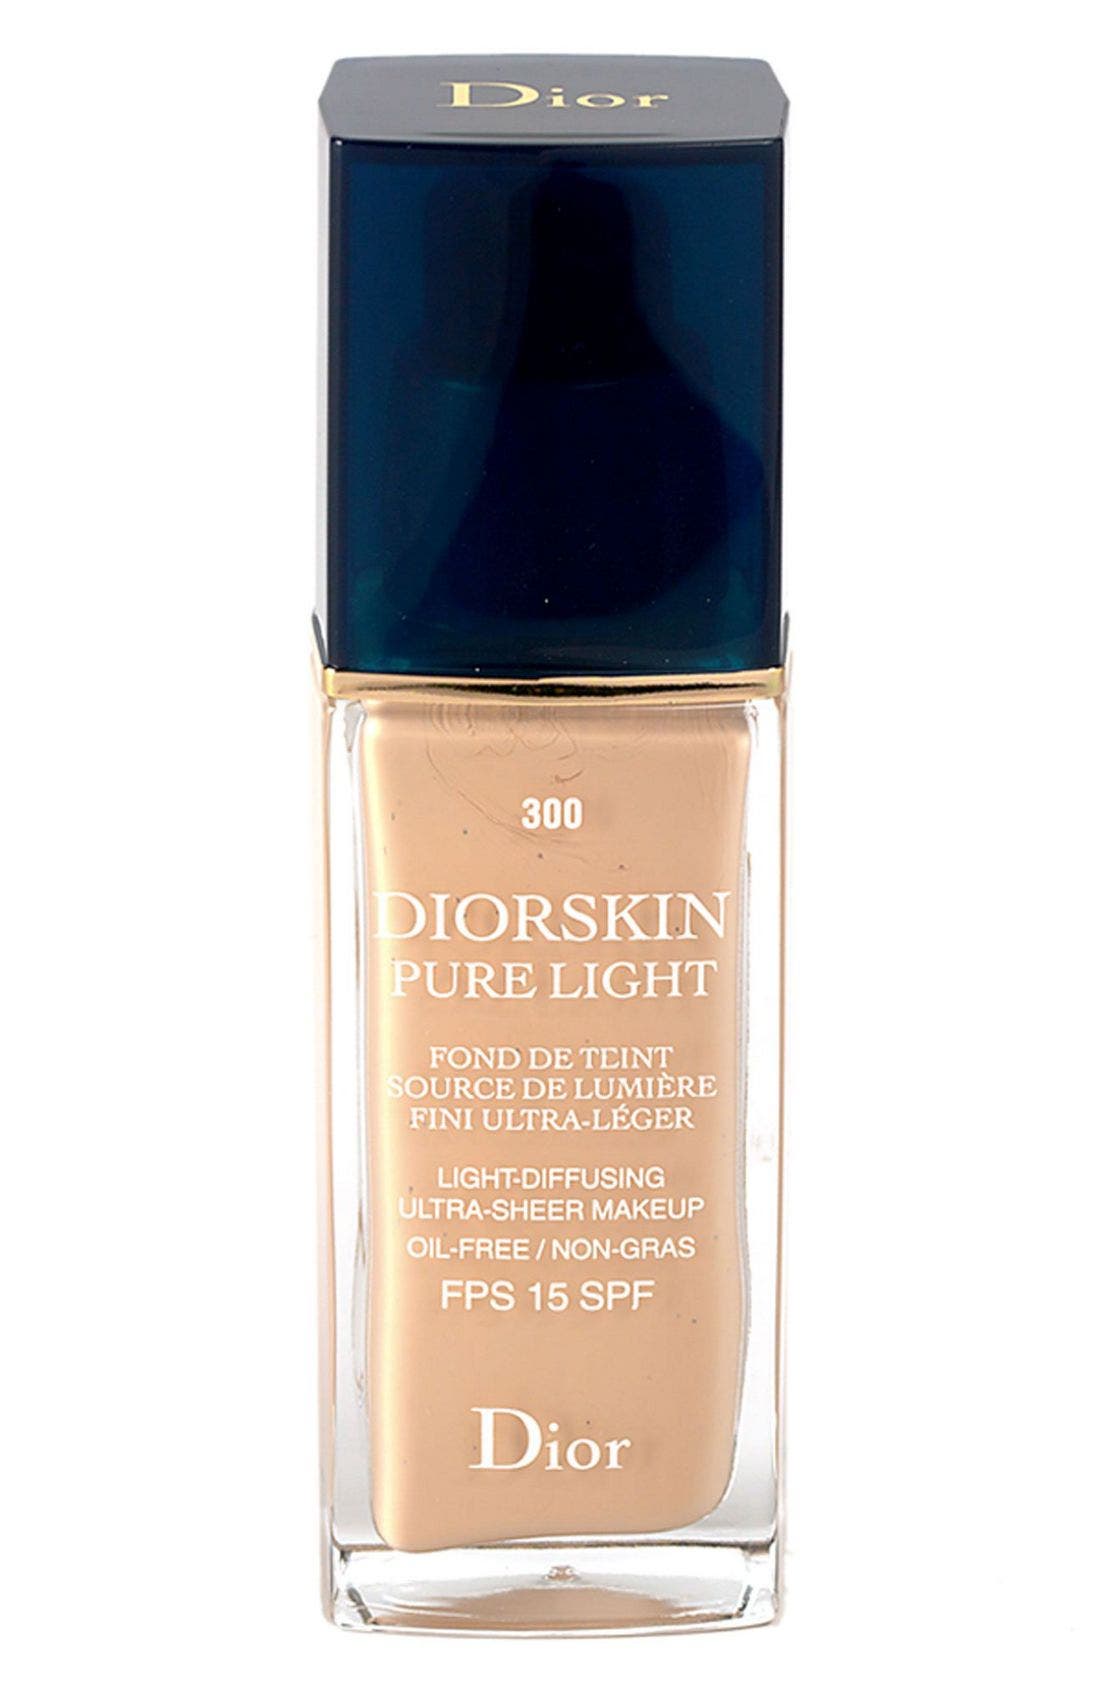 Dior 'Diorskin' Pure Light | Nordstrom